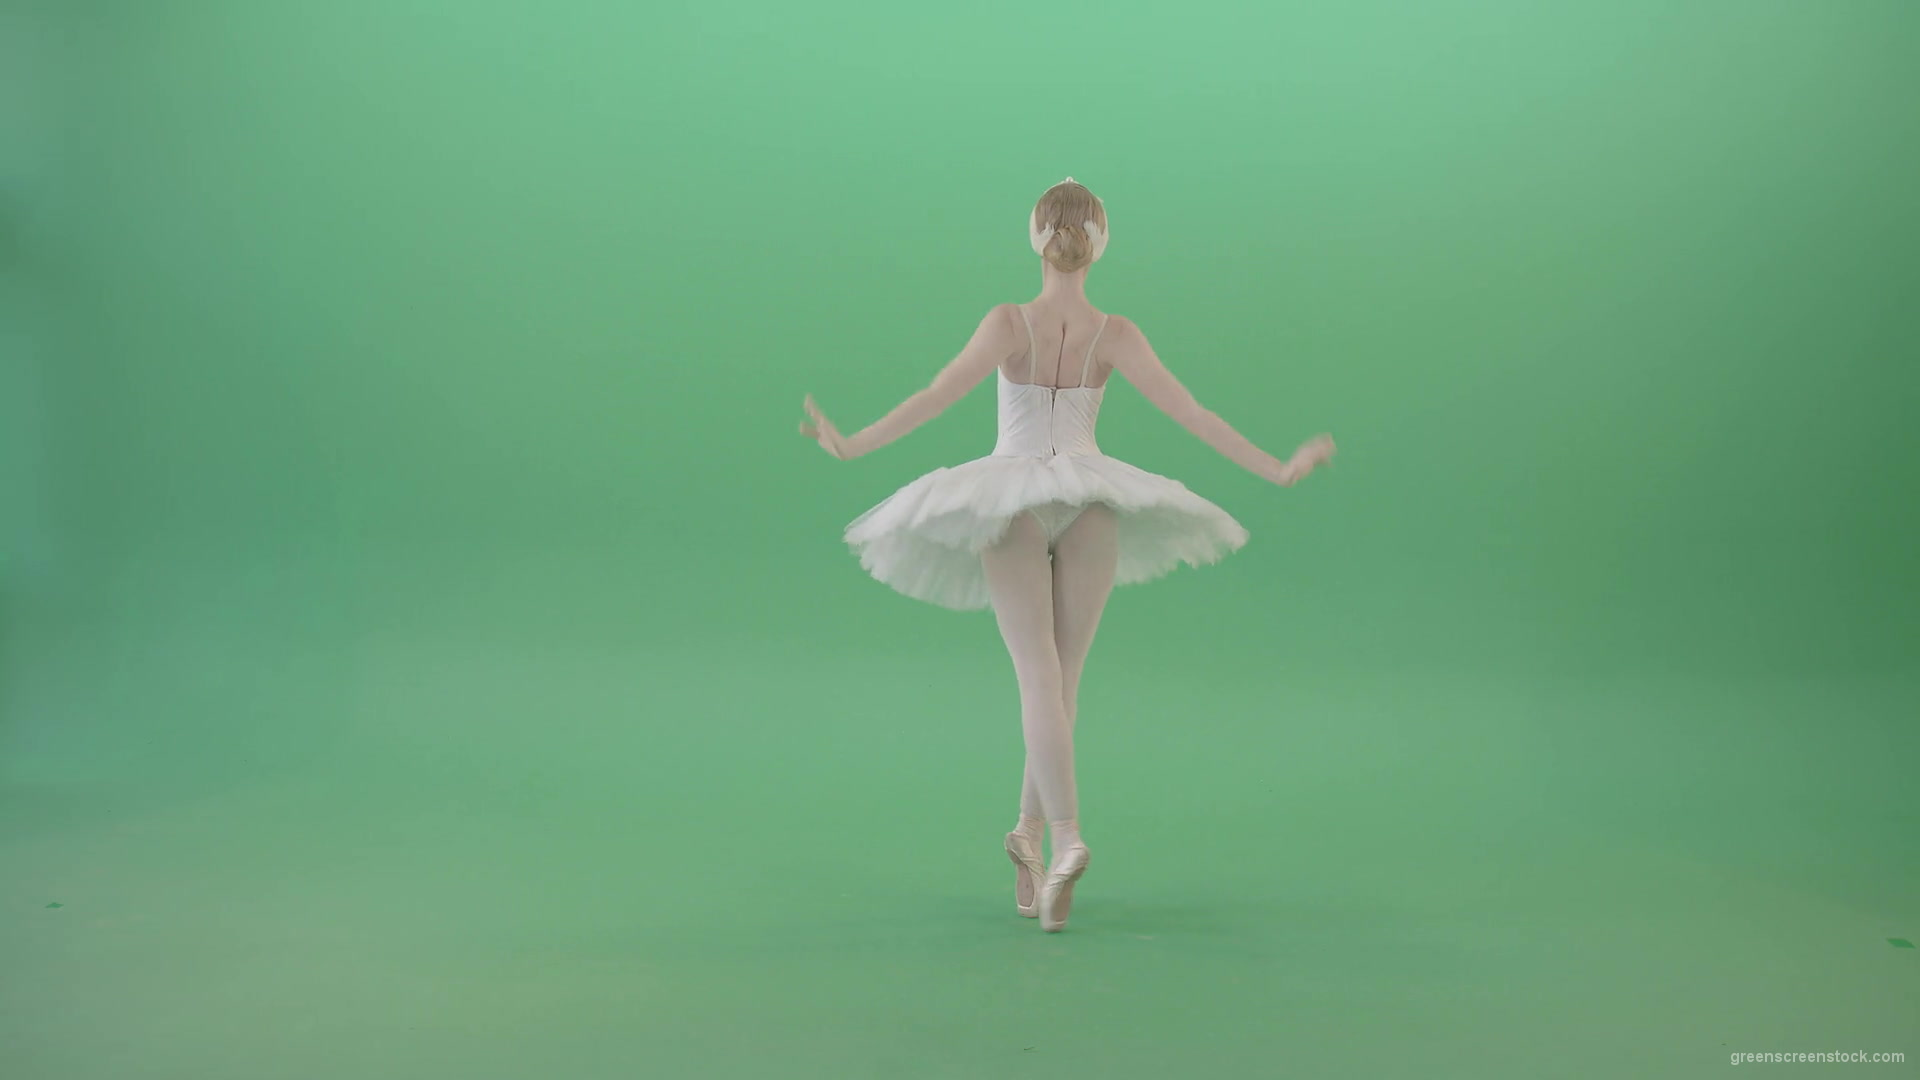 Beautiful-swan-lake-ballet-dance-ballerina-in-back-side-view-dancing-on-green-screen-4K-Video-Footage-1920_005 Green Screen Stock